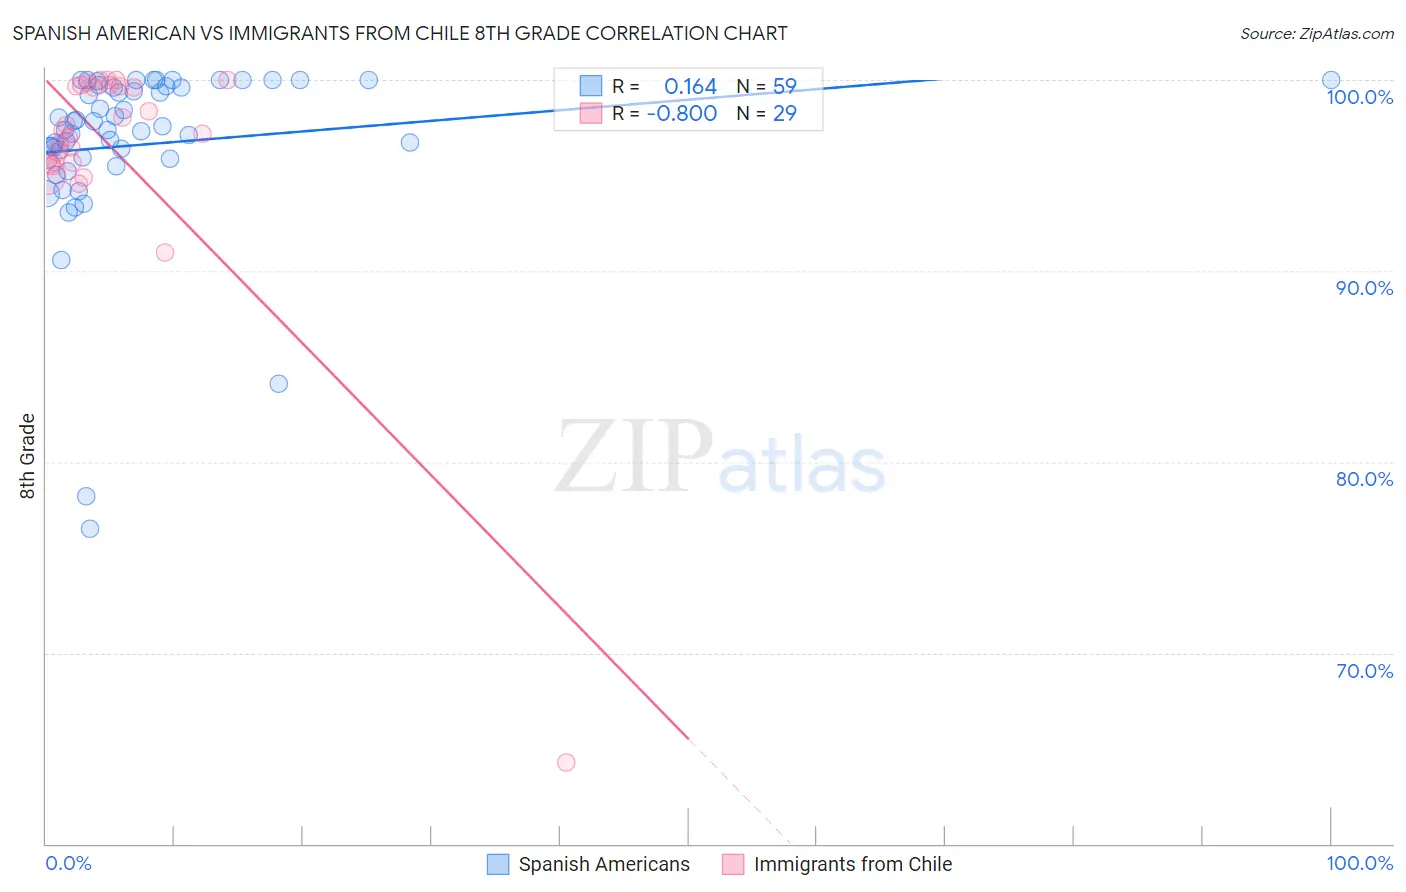 Spanish American vs Immigrants from Chile 8th Grade